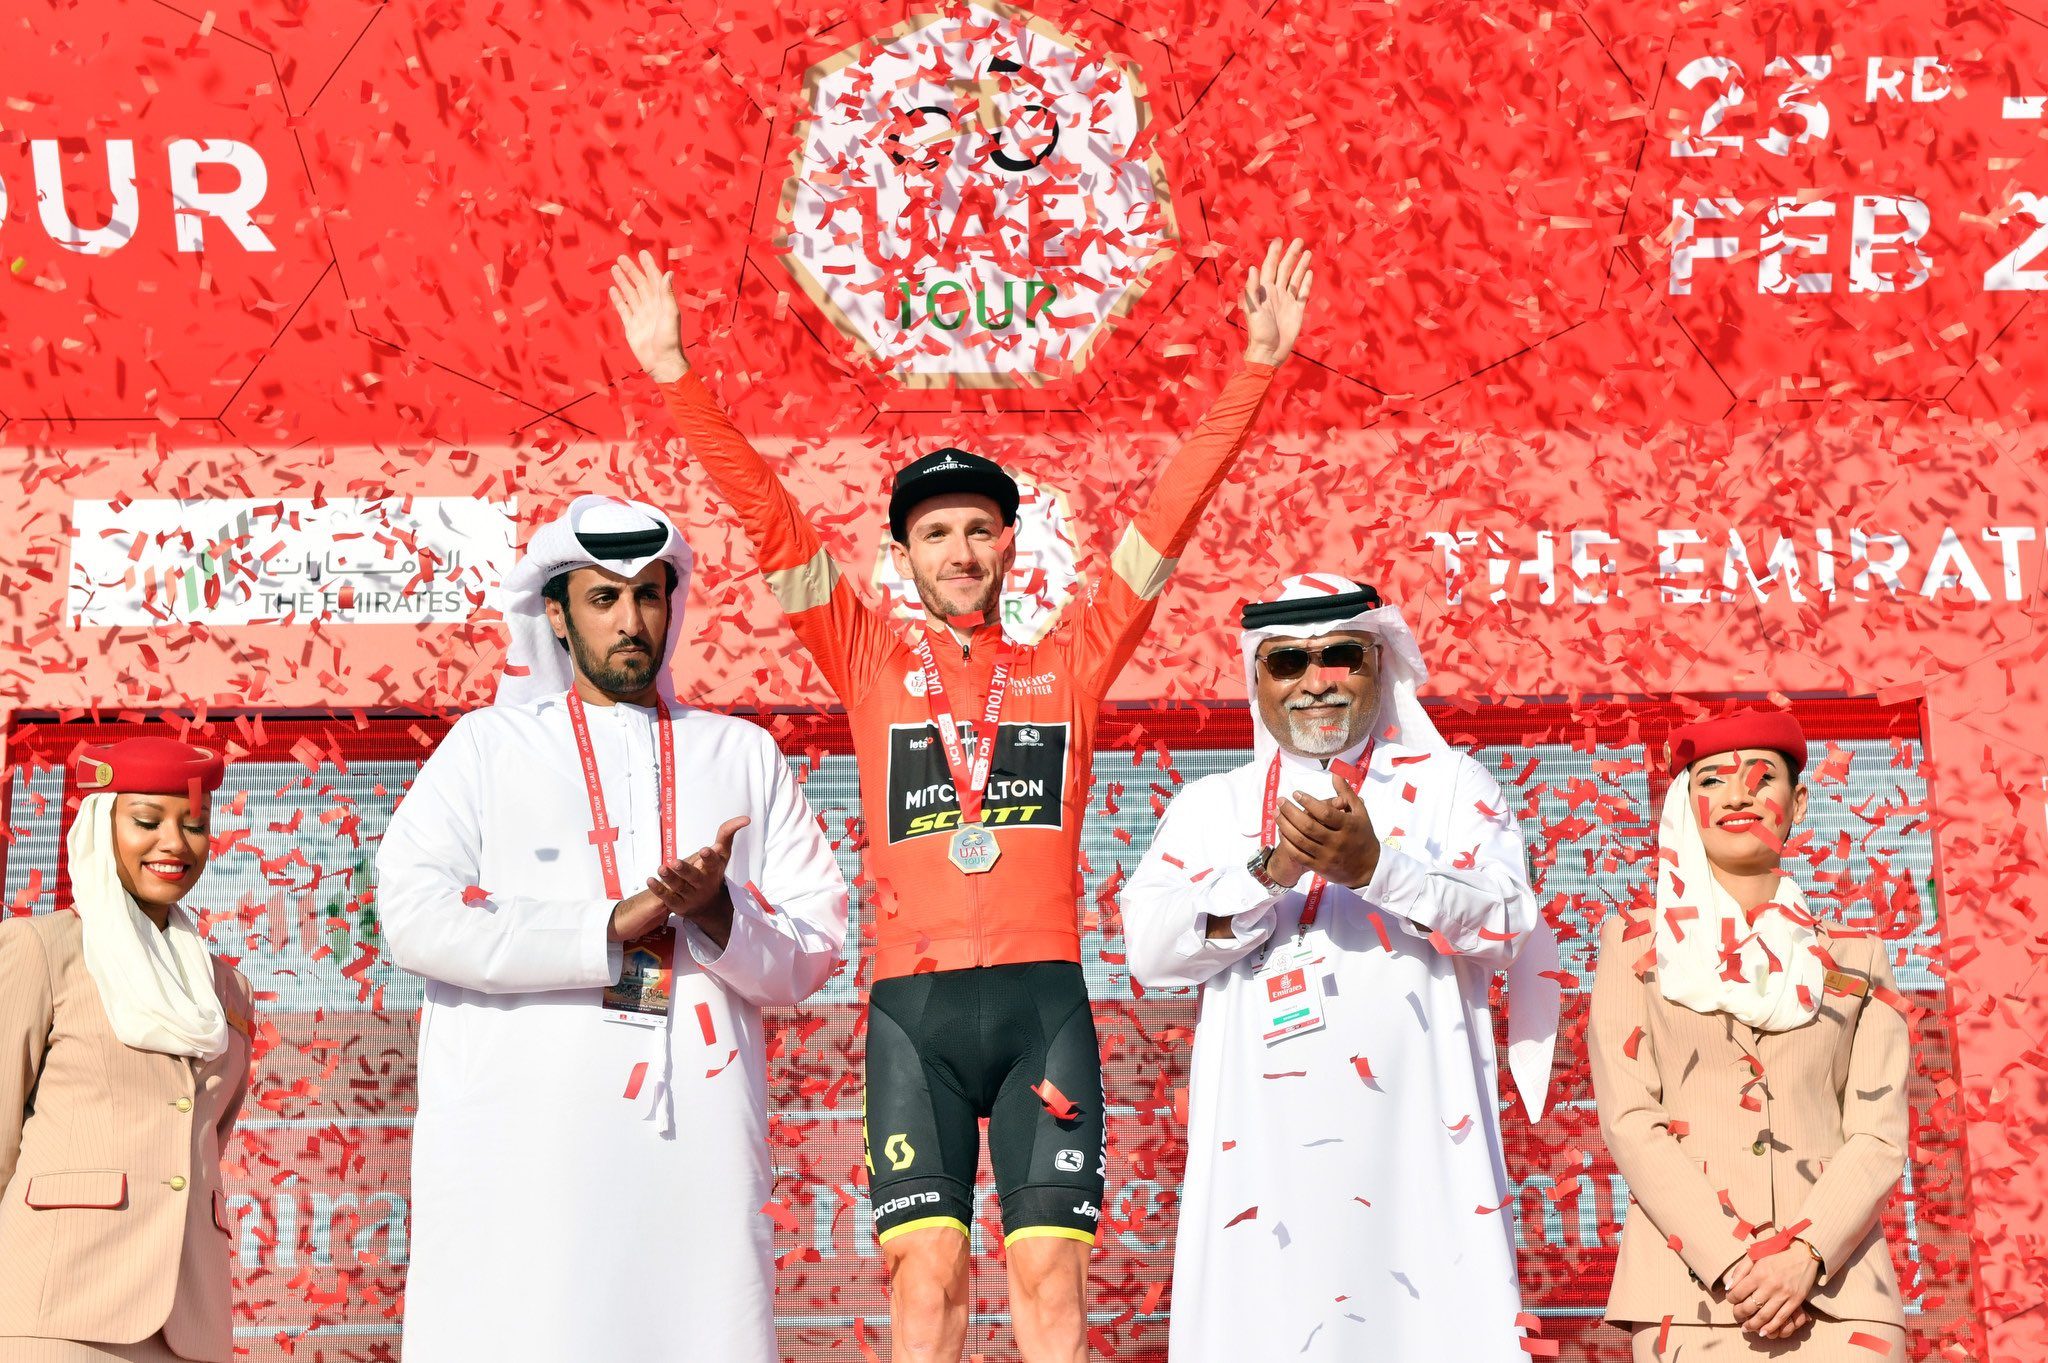 Адам Йейтс выиграл самый тяжёлый этап «Тура ОАЭ»